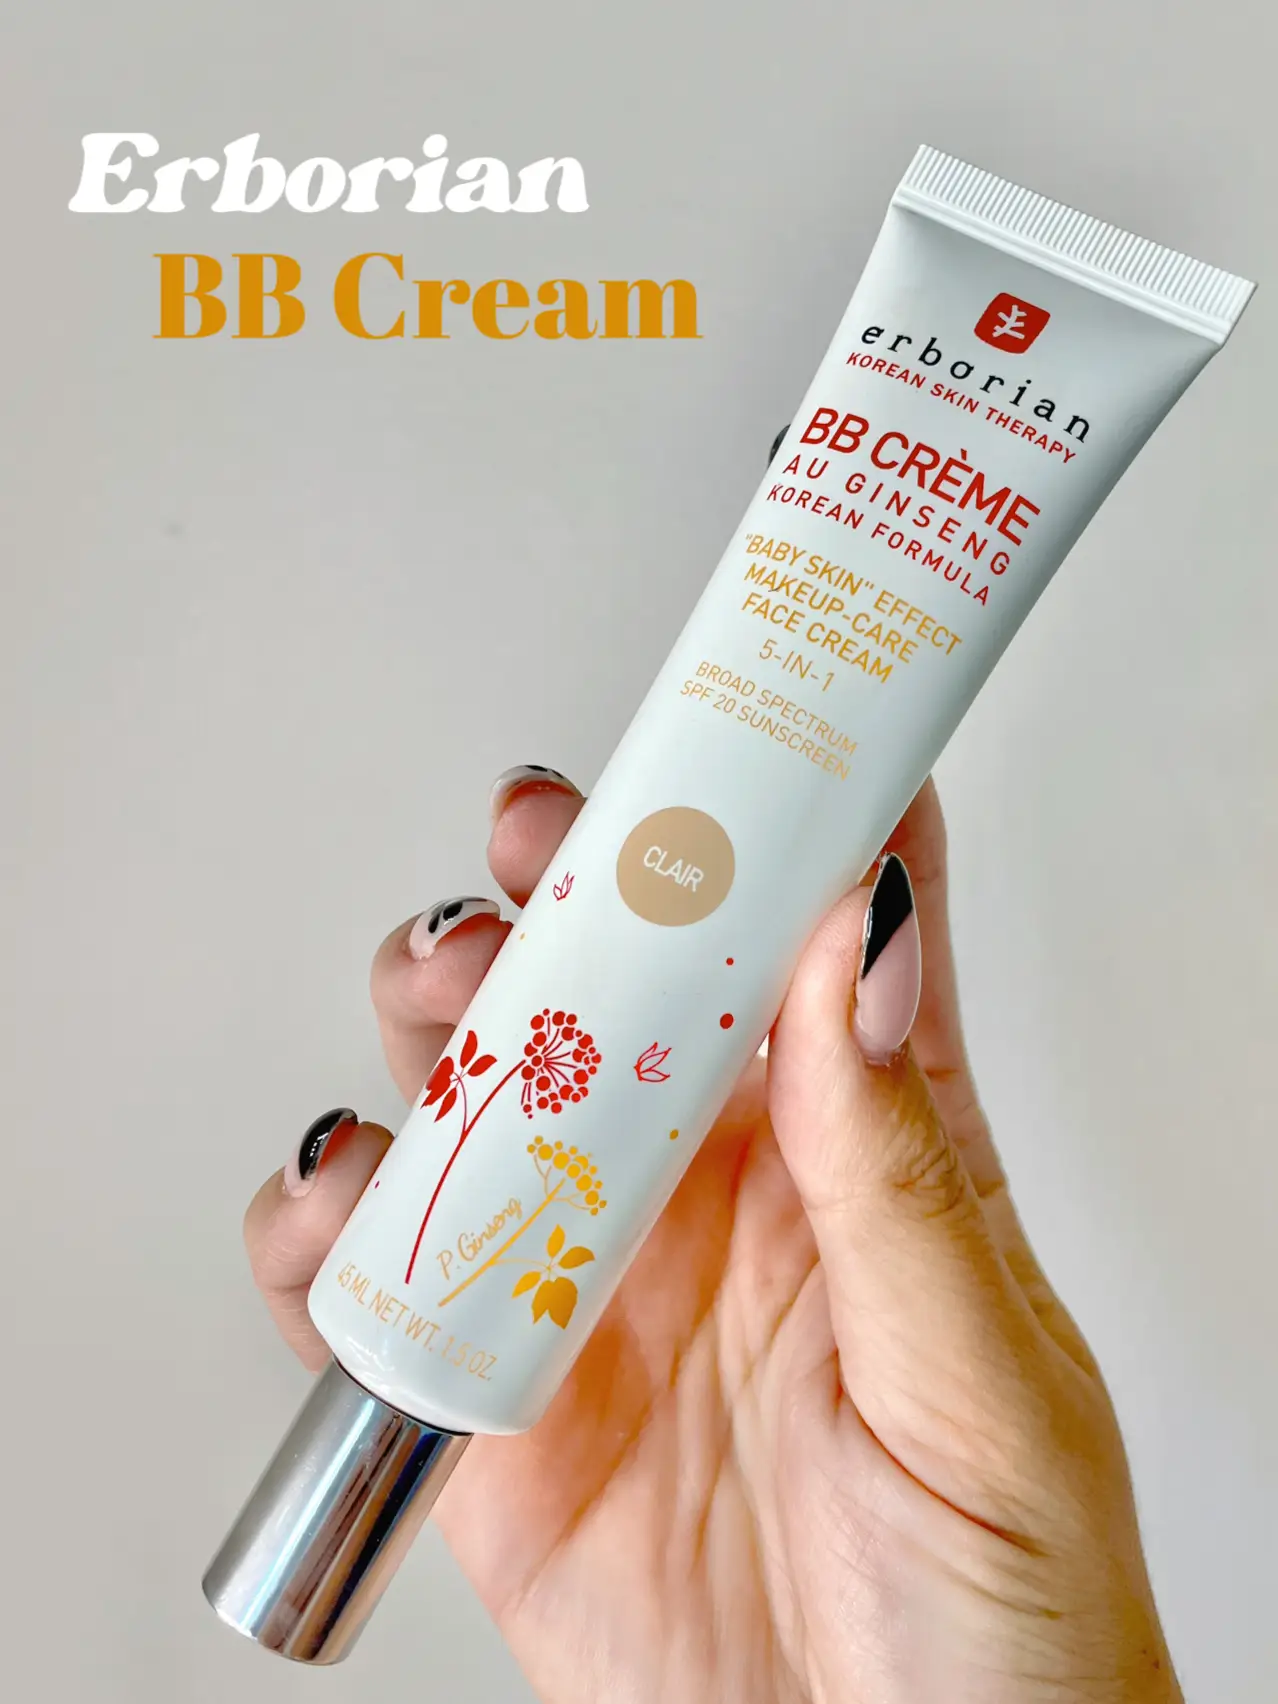 Hit Me BB One More Time – Erborian BB Crème Au Ginseng Korean